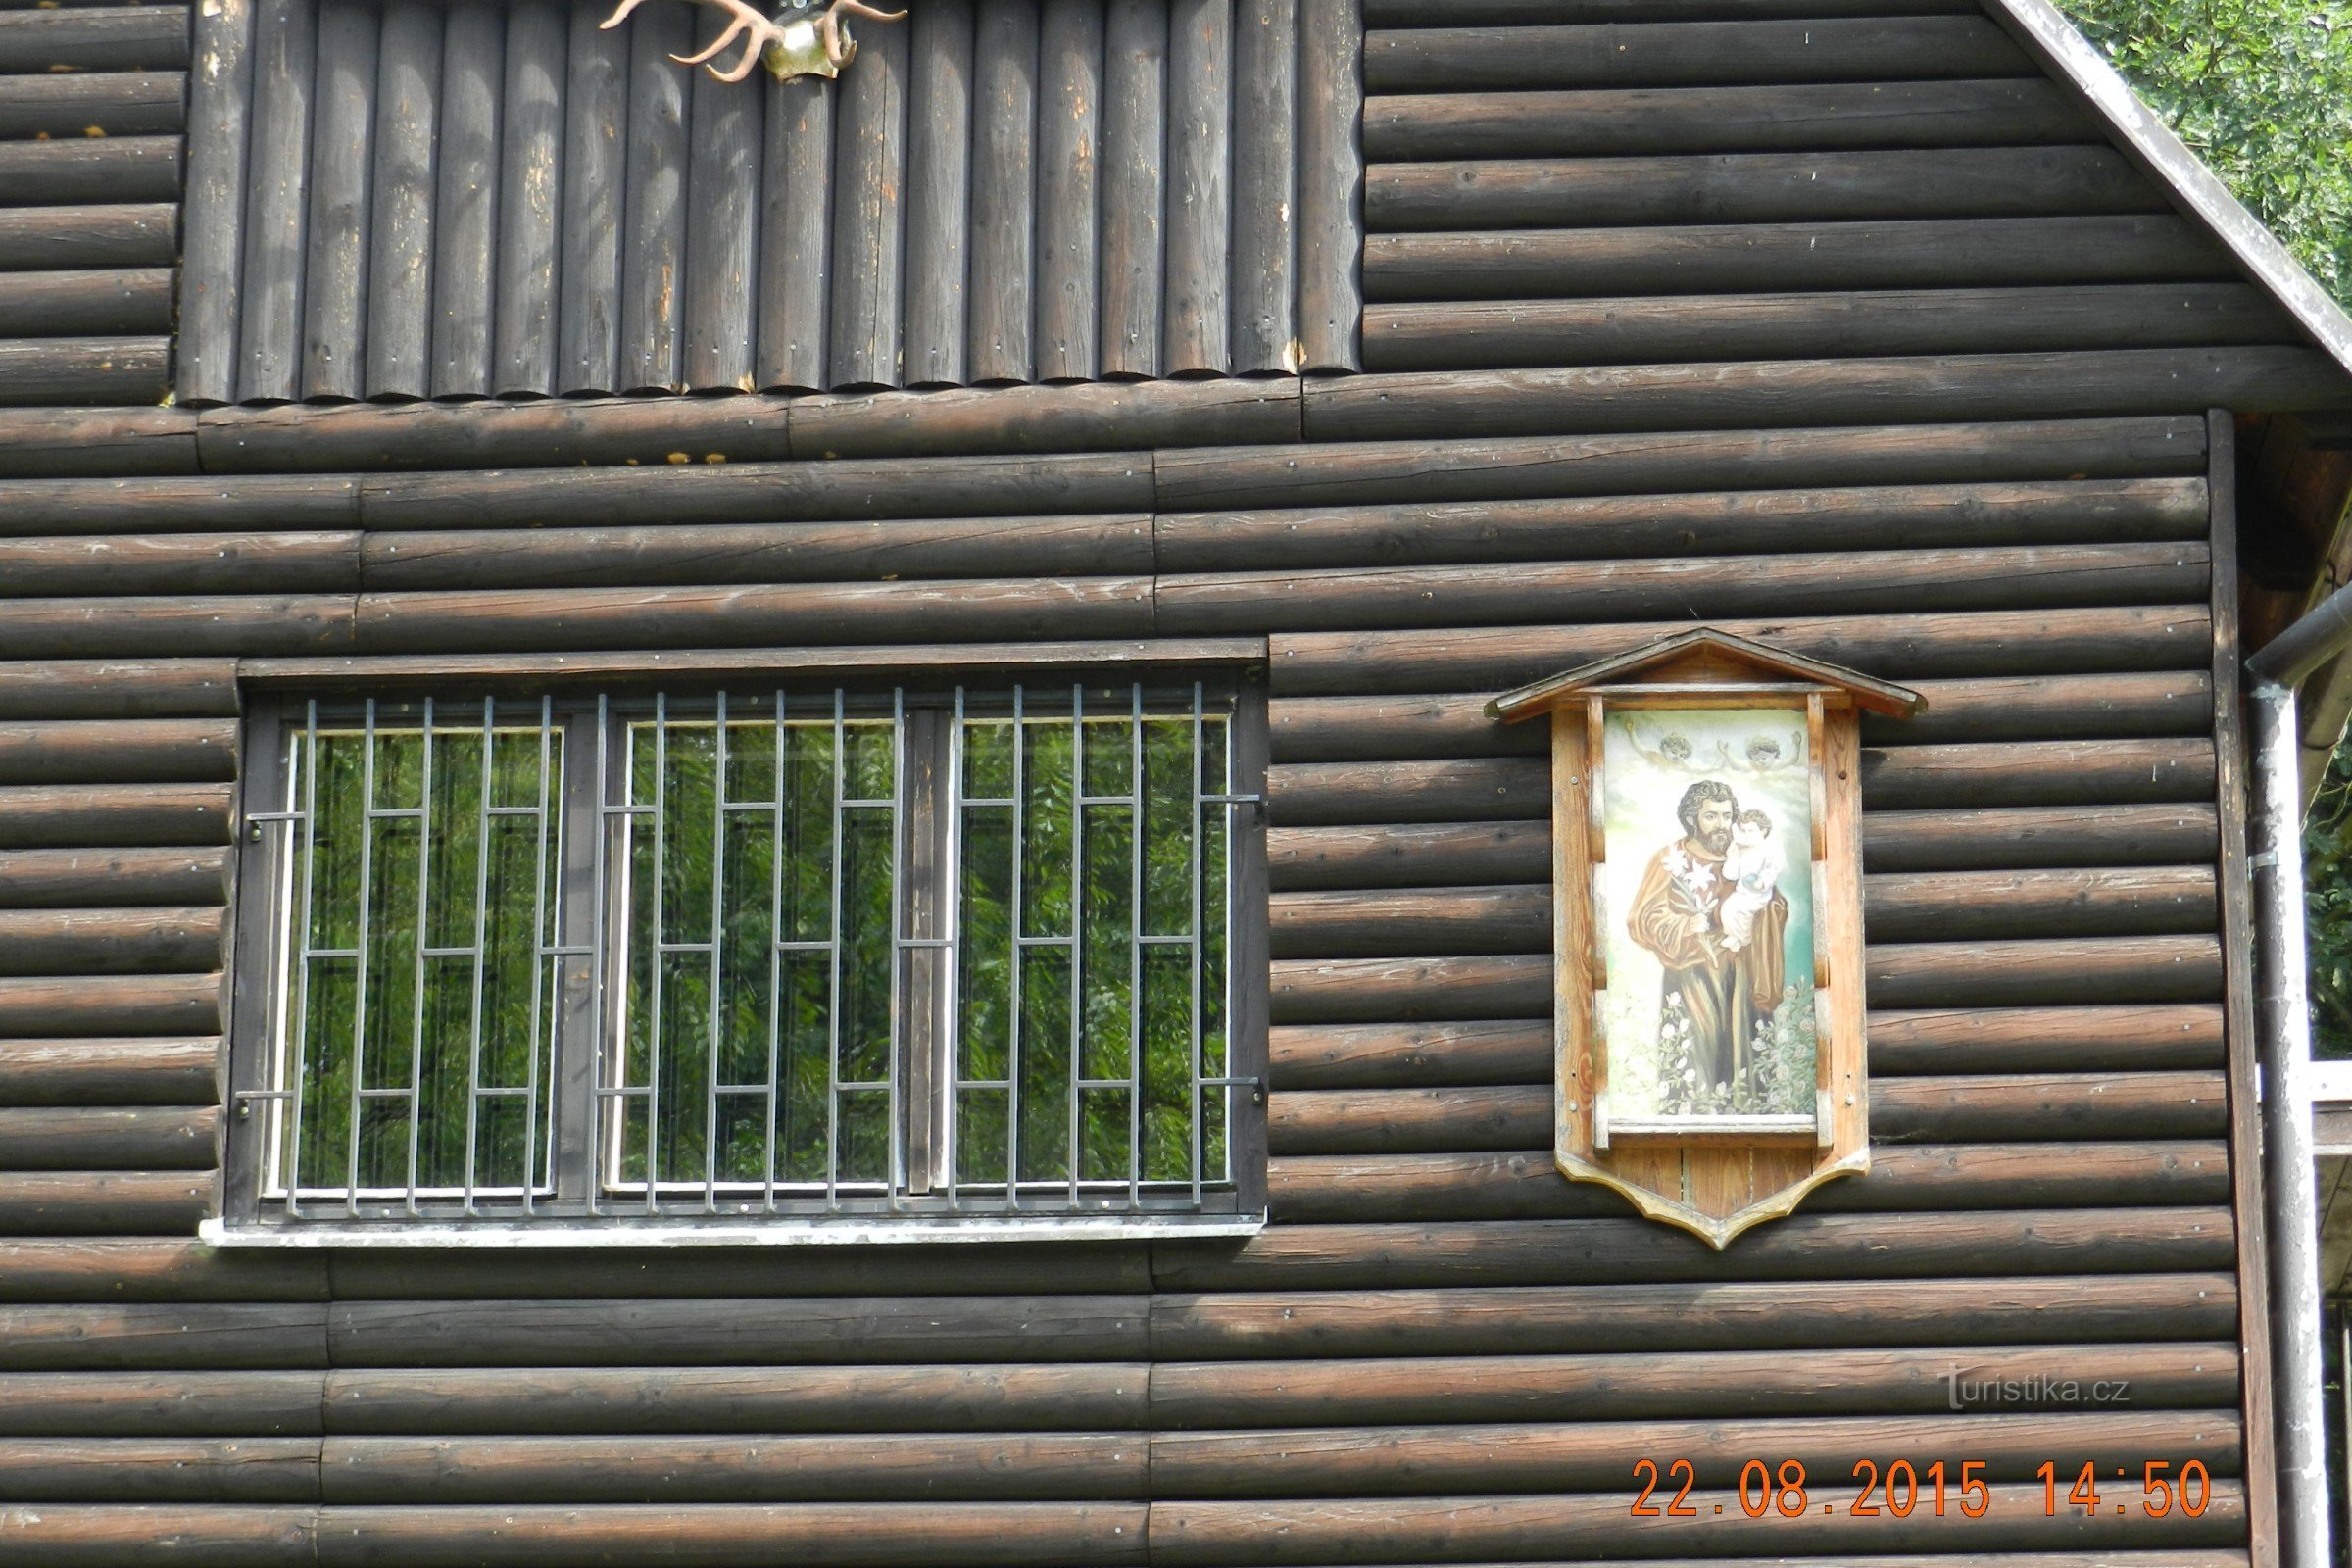 Hrabová, Dubicko - St. Josephs jaktstuga (utflykt med barnvagn, stekning efter